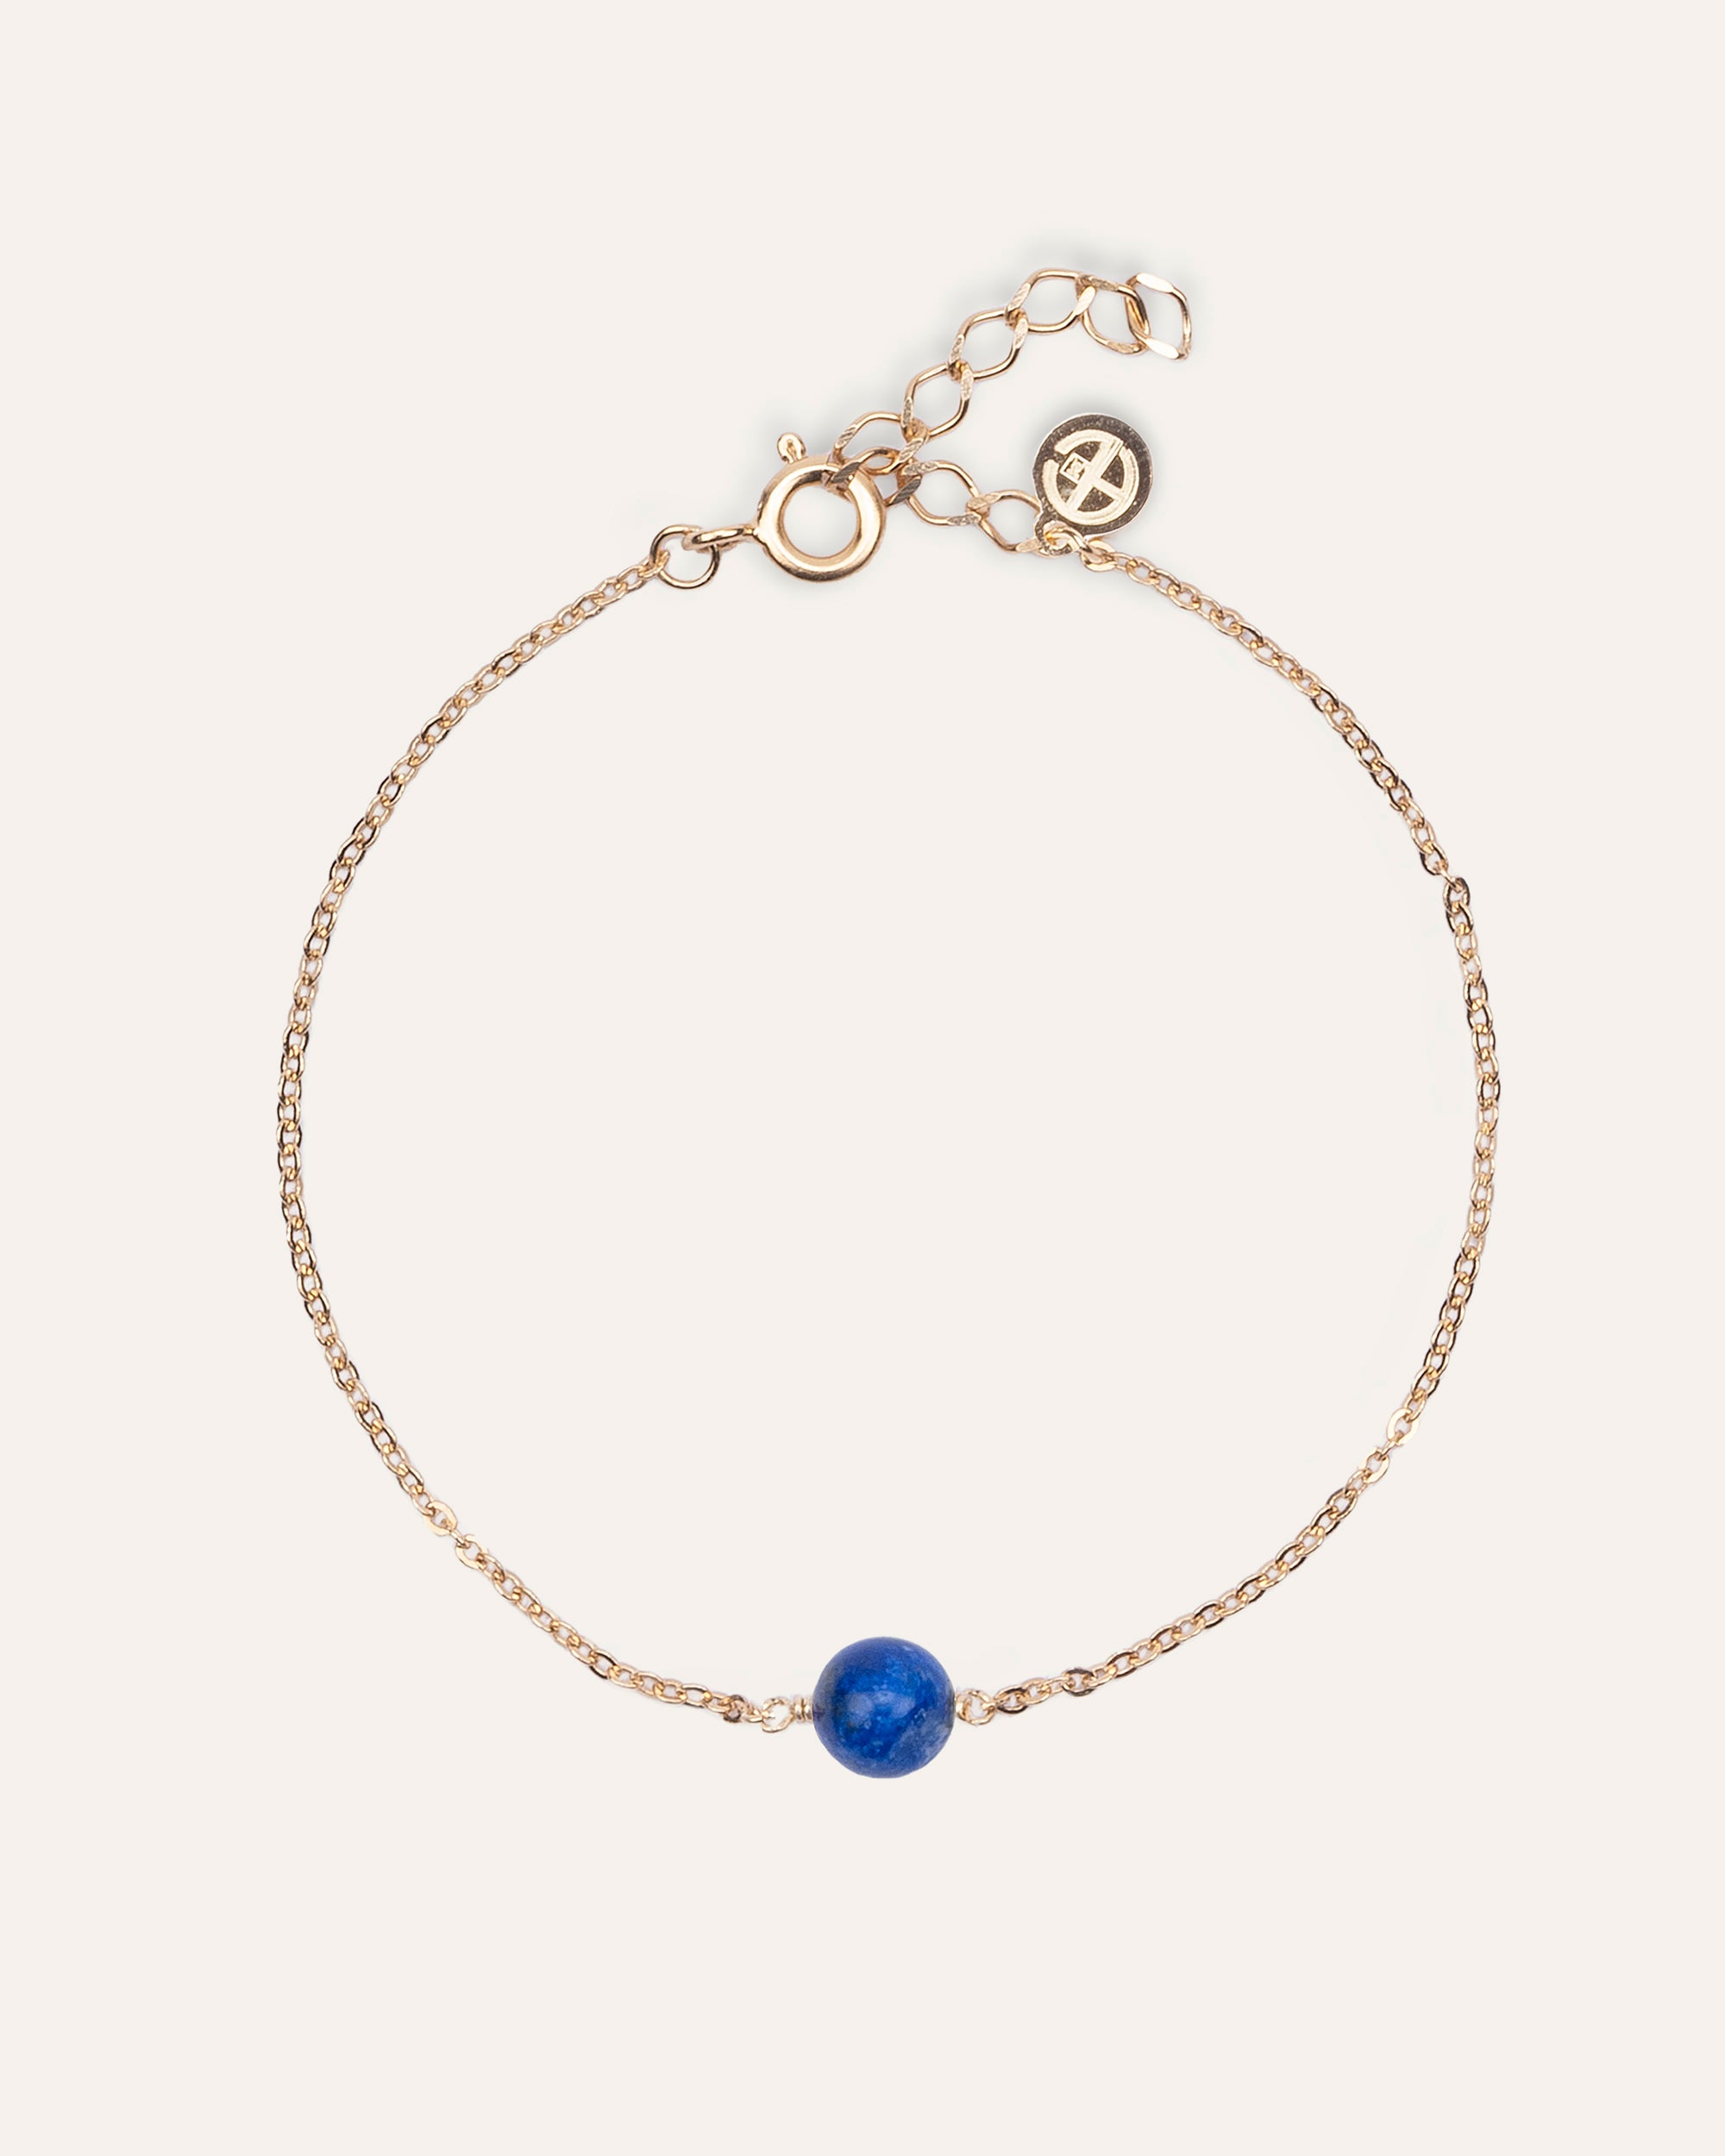 Elegance gold and lapis lazuli bracelet